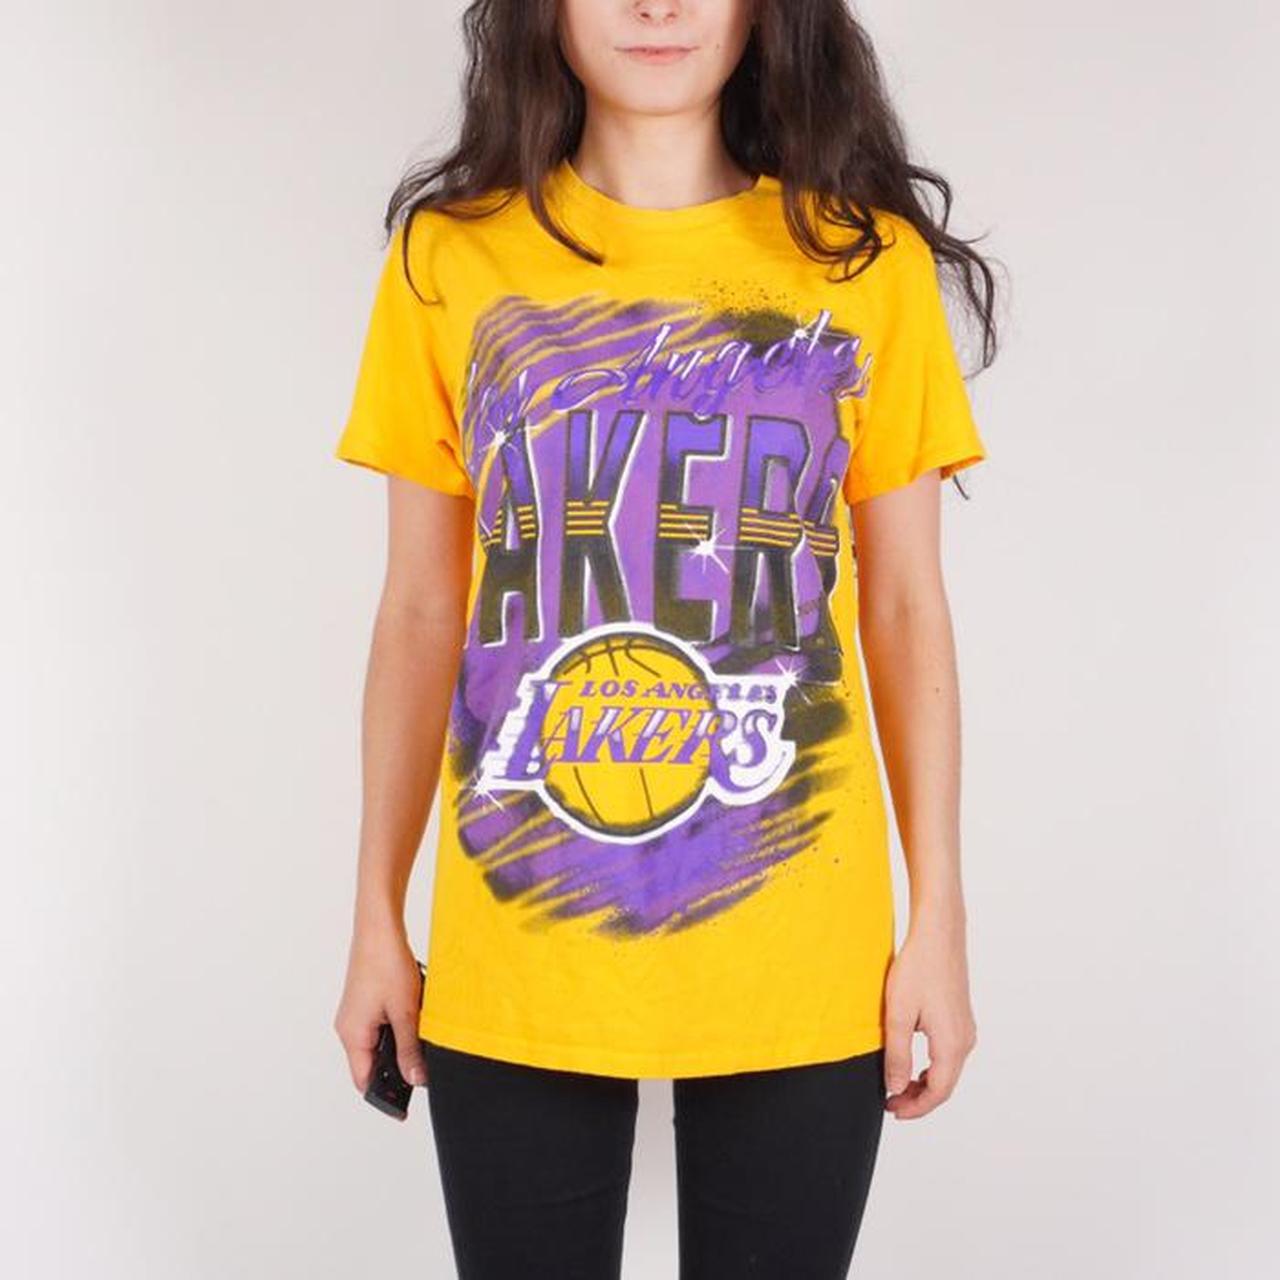 Los Angeles Lakers Girl NBA T-Shirt